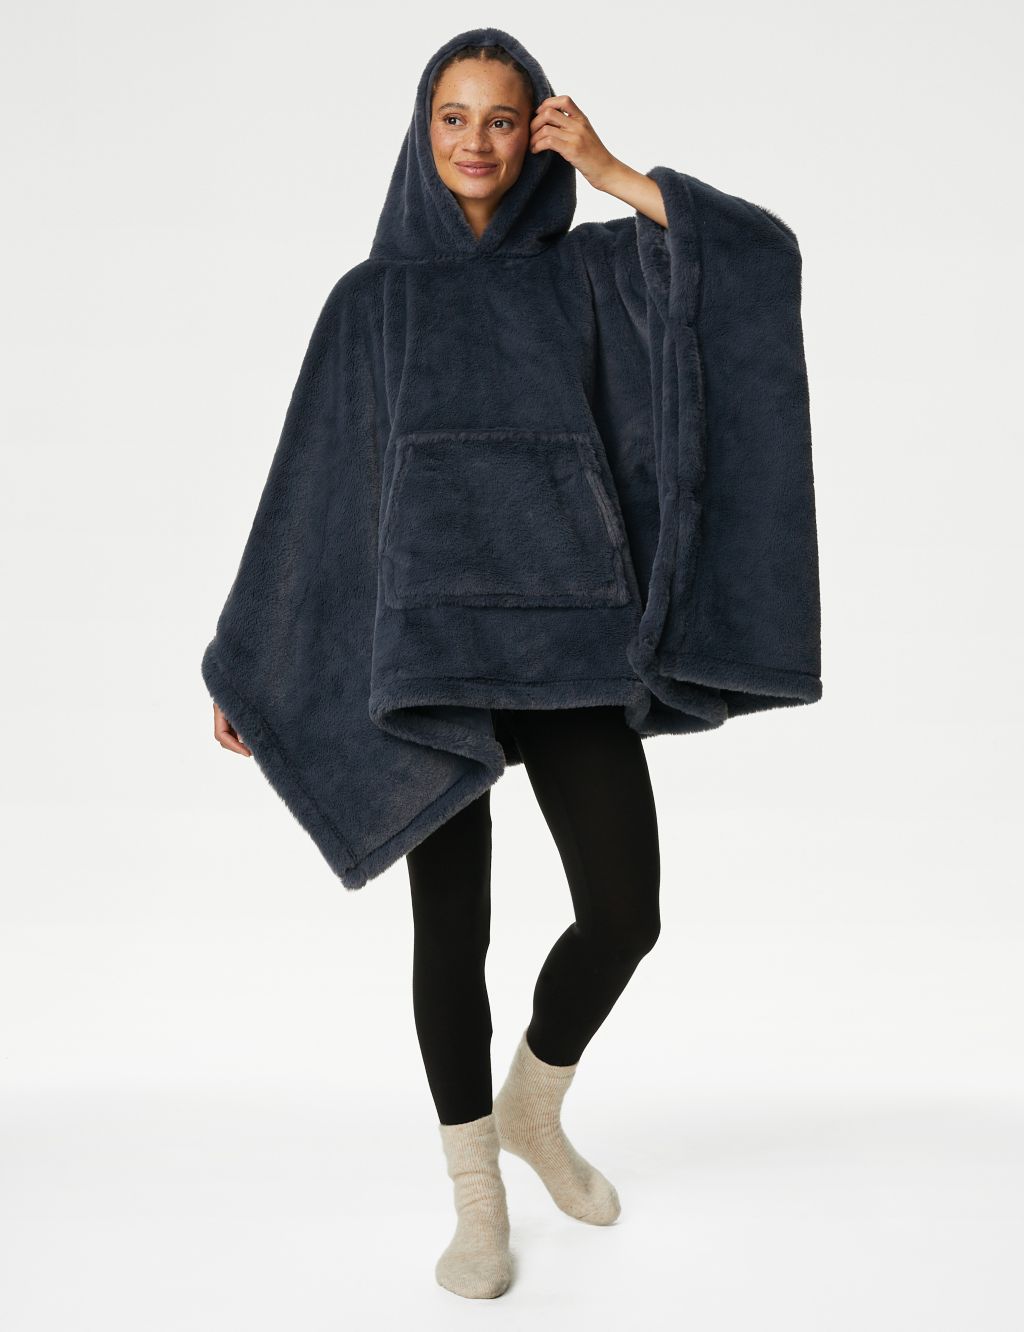 Supersoft Faux Fur Hooded Blanket image 1